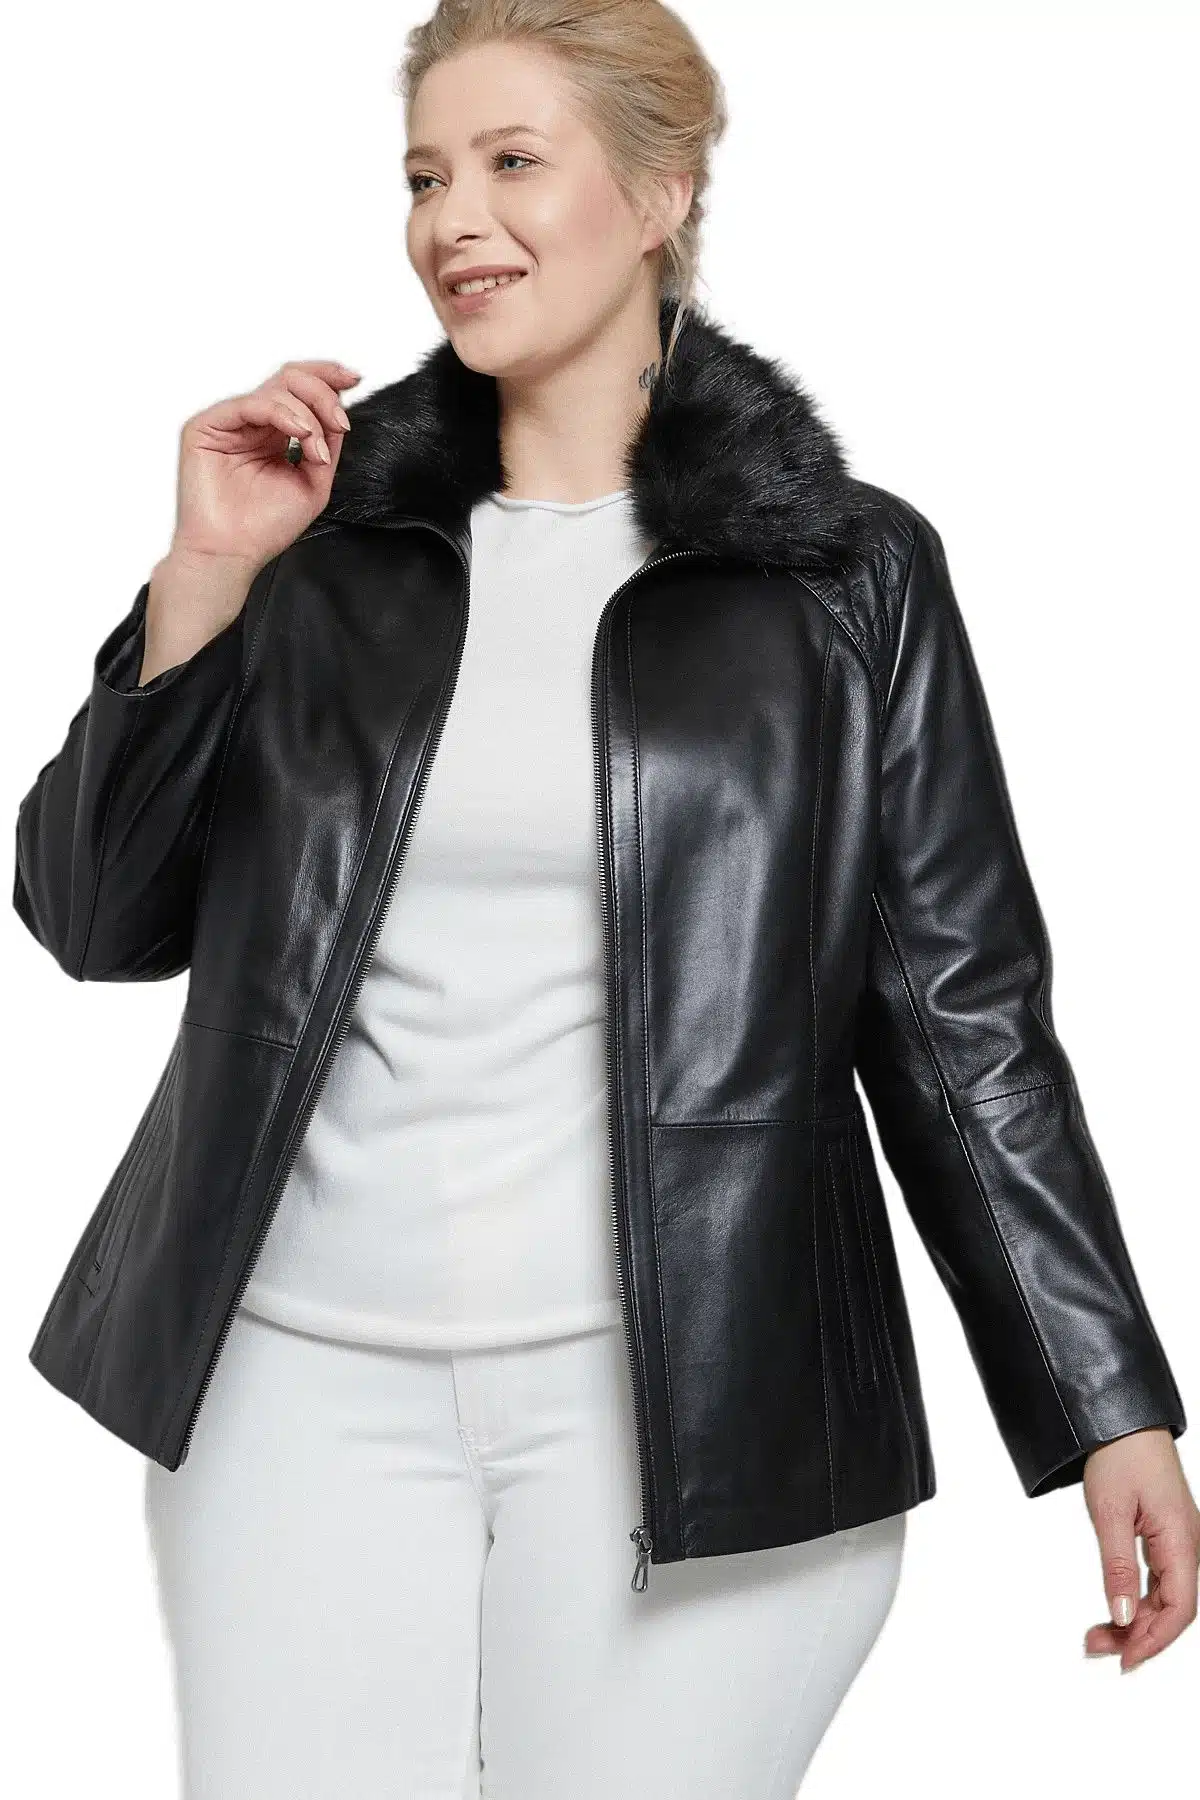 Fur Women’s Leather Jacket in Black (1)_result